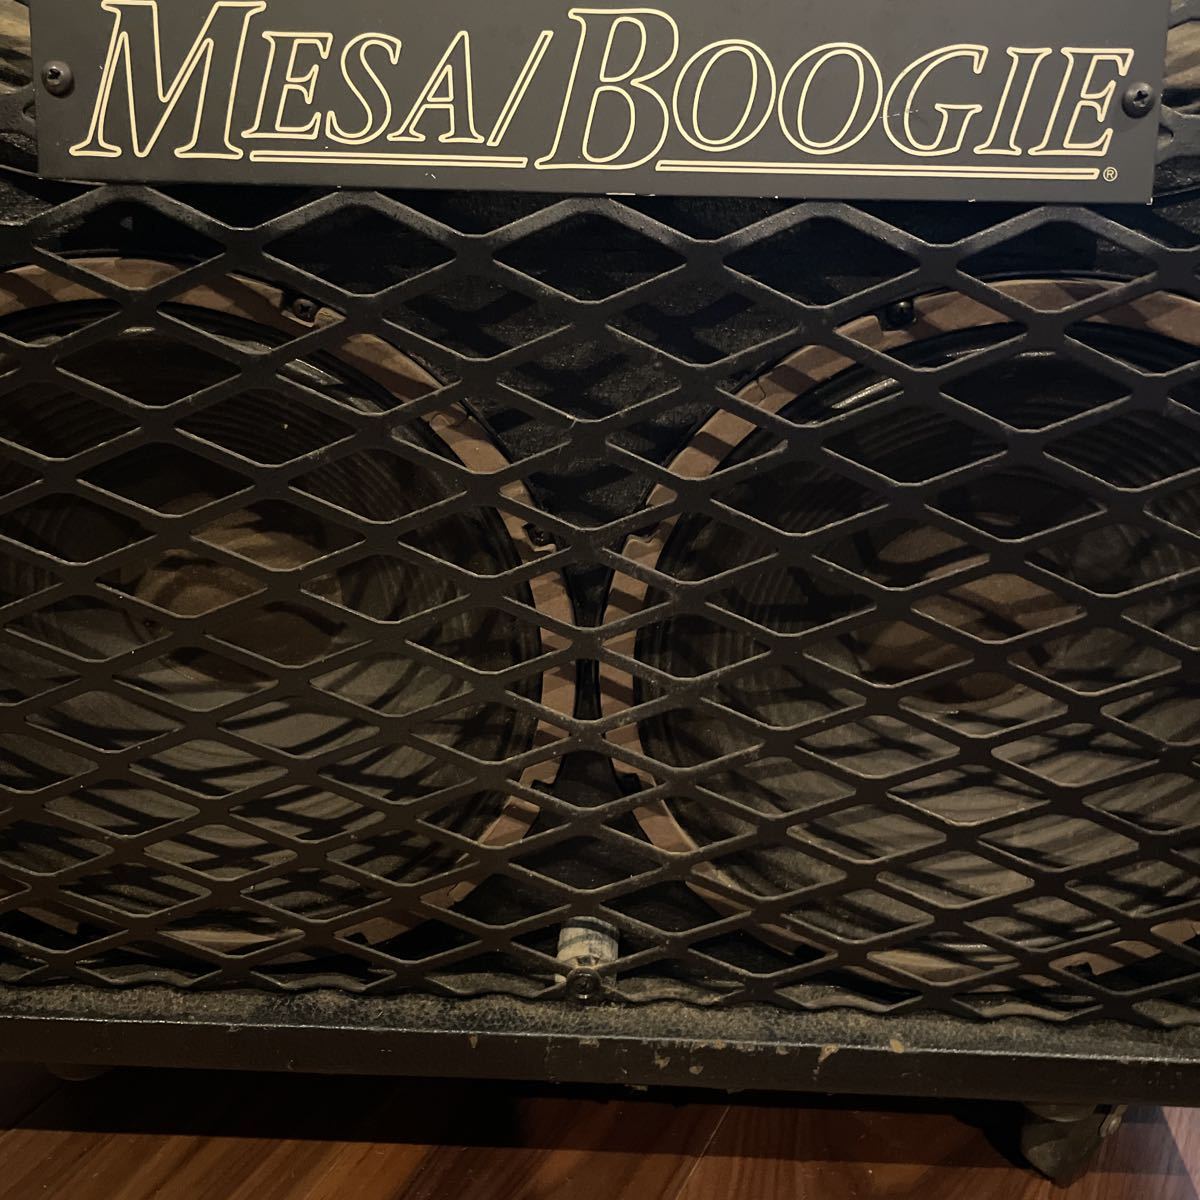 Mesa Boogieメサブギー スピーカーキャビネット 412 4×12 Black Shadow 